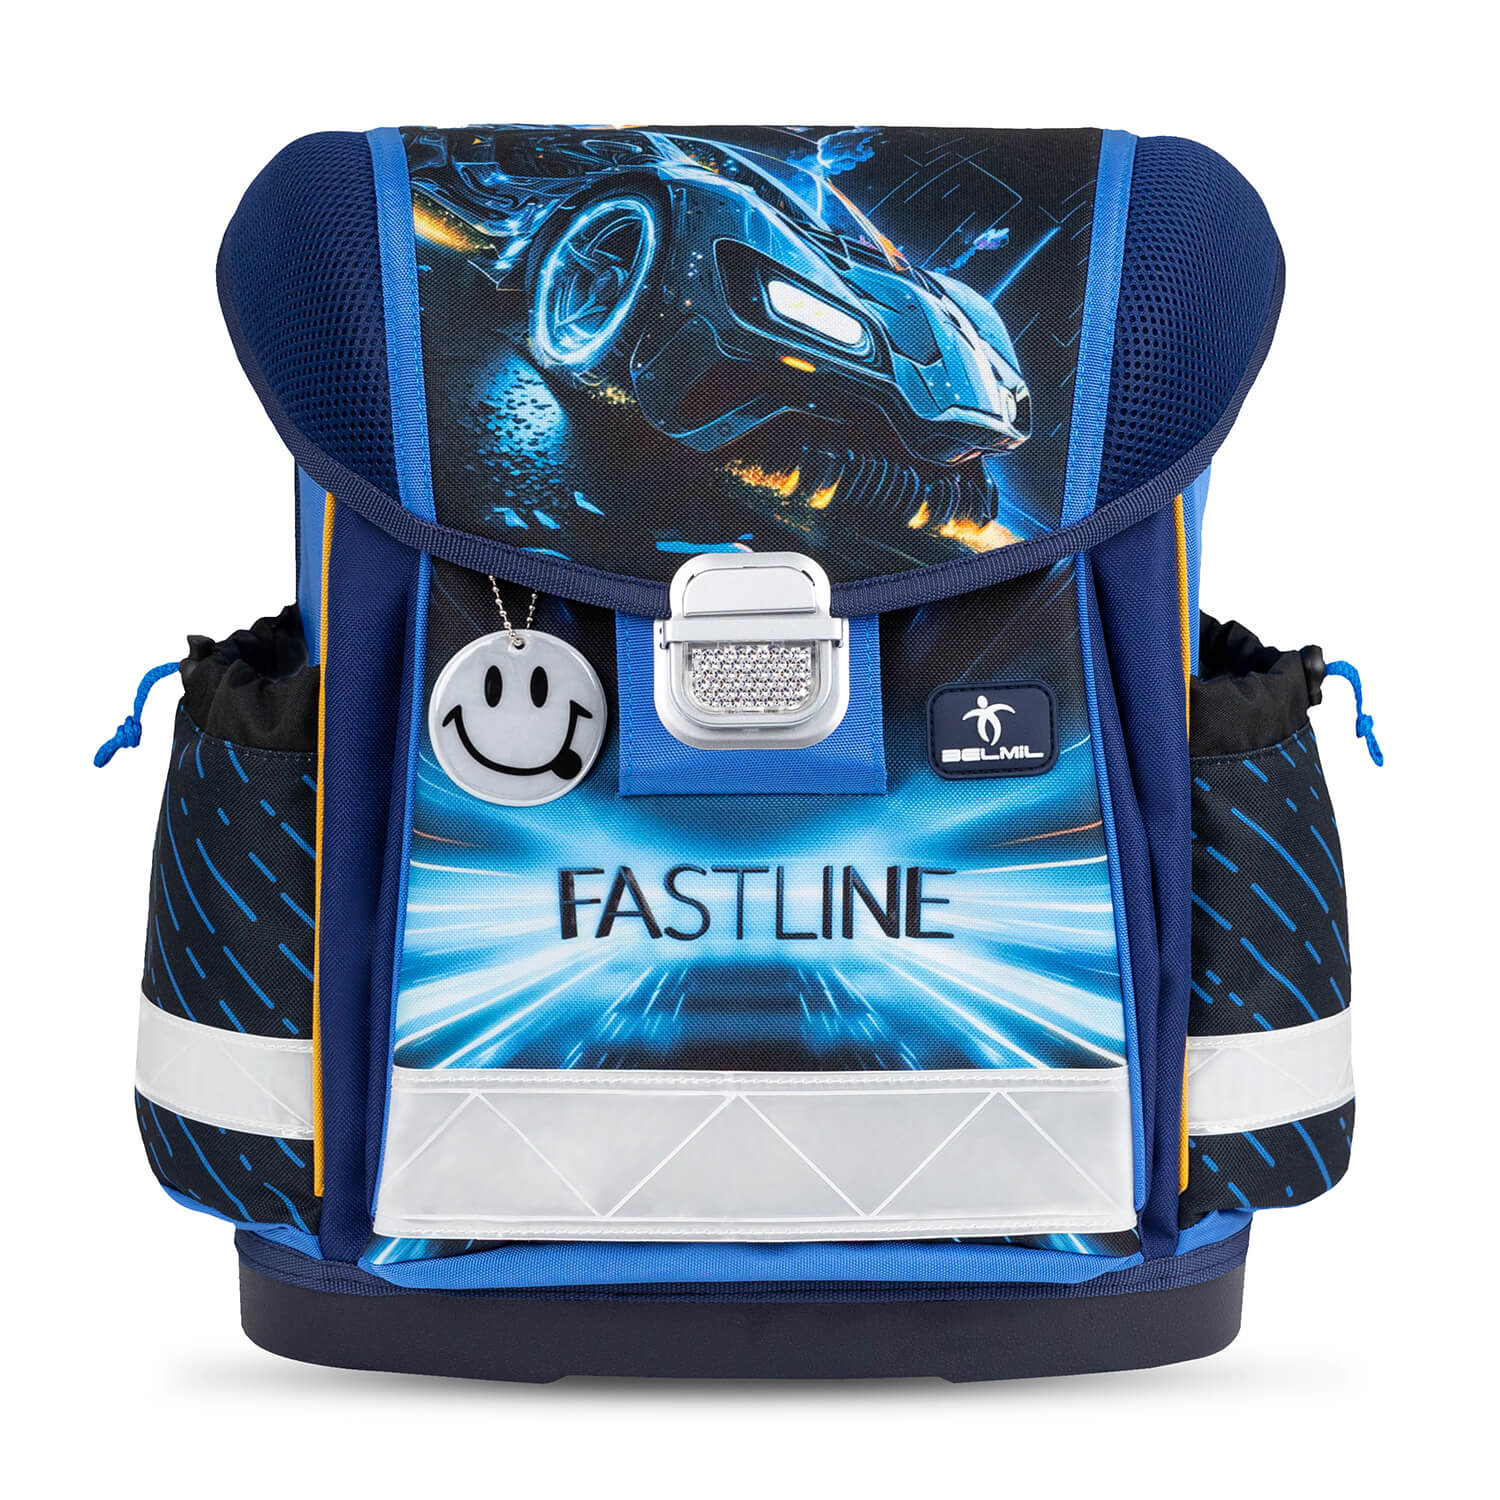 Classy Fastline schoolbag set 4 pcs